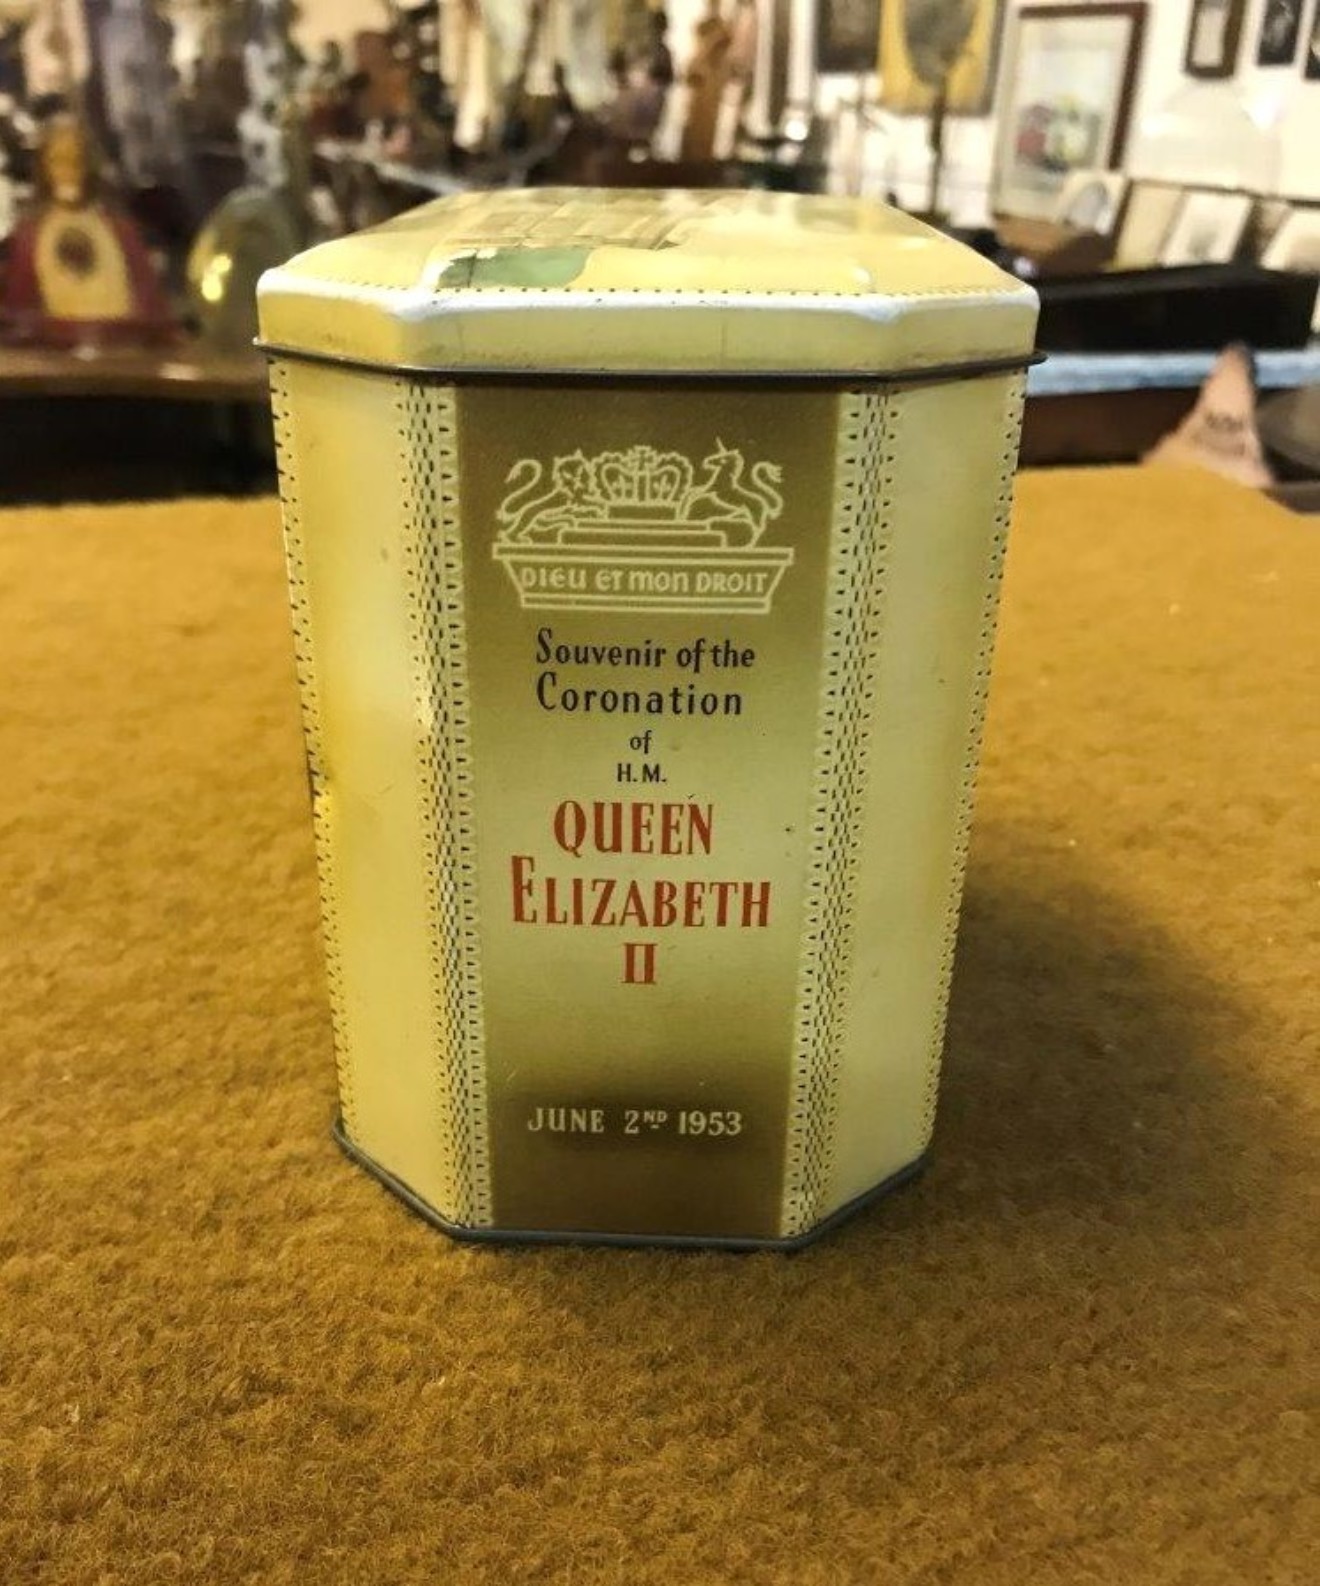 Vintage Tea Caddy Souvenir of the Coronation of H.M Queen Elizabeth II June 2nd 1953